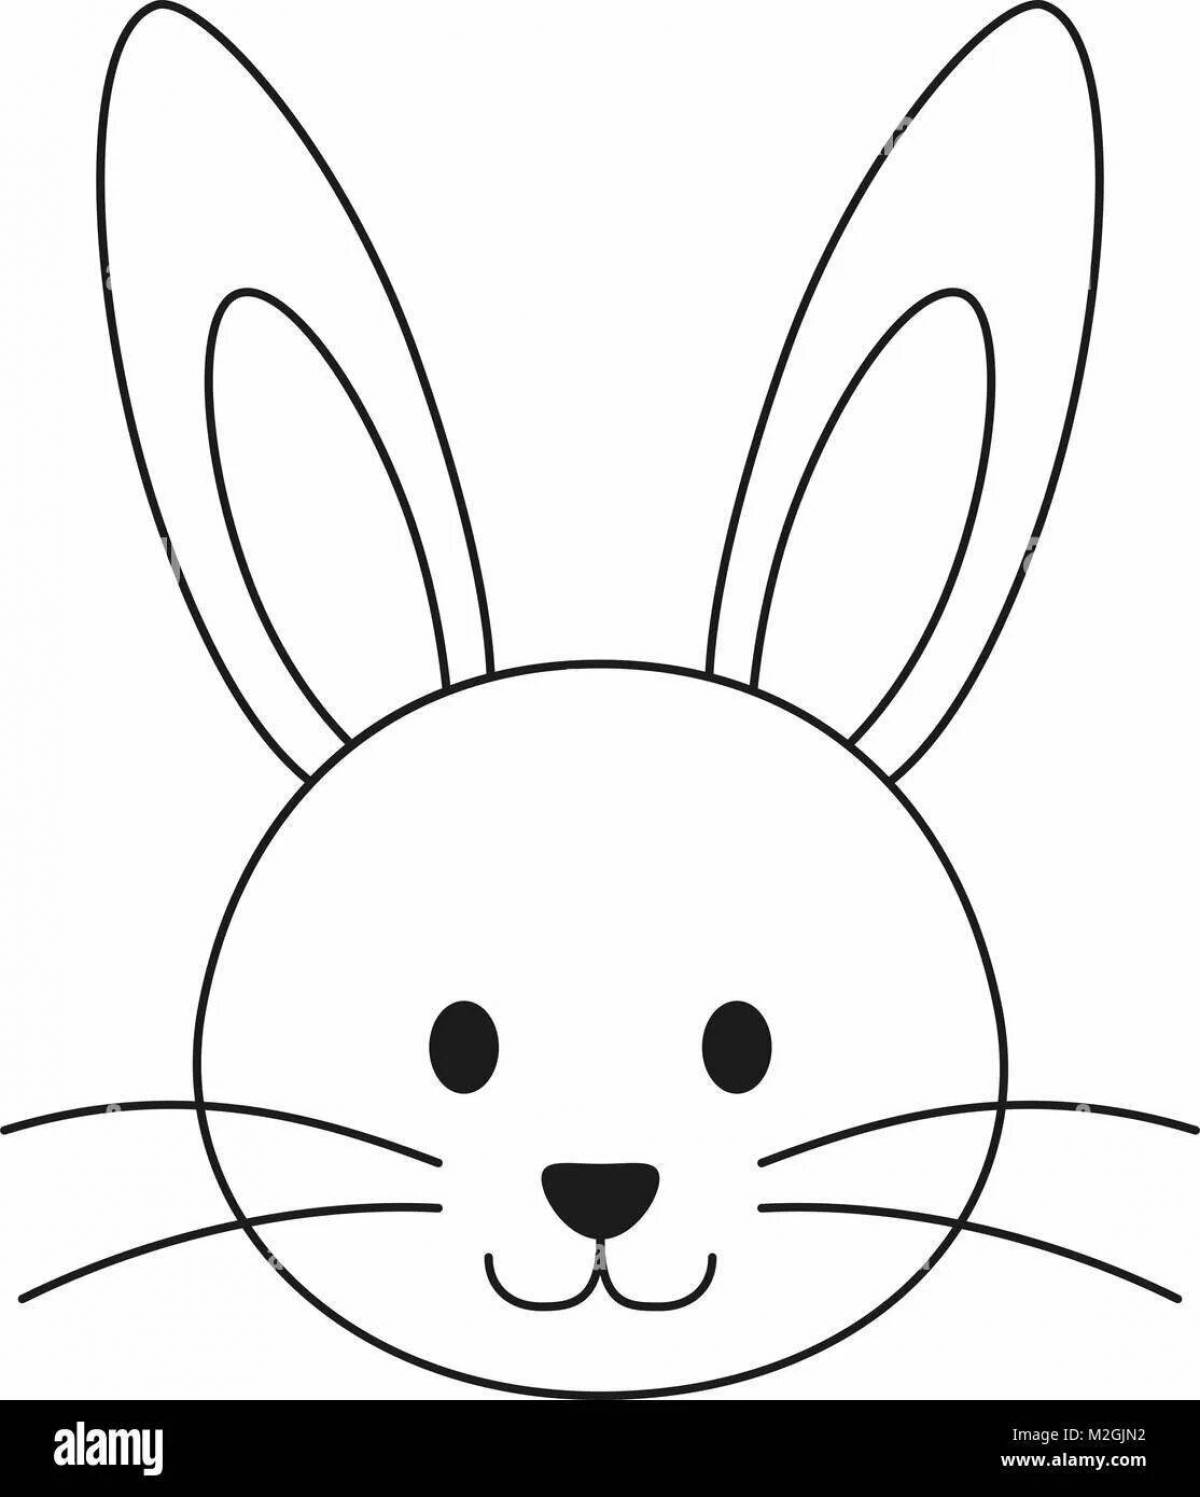 Яркая раскраска page bunny face